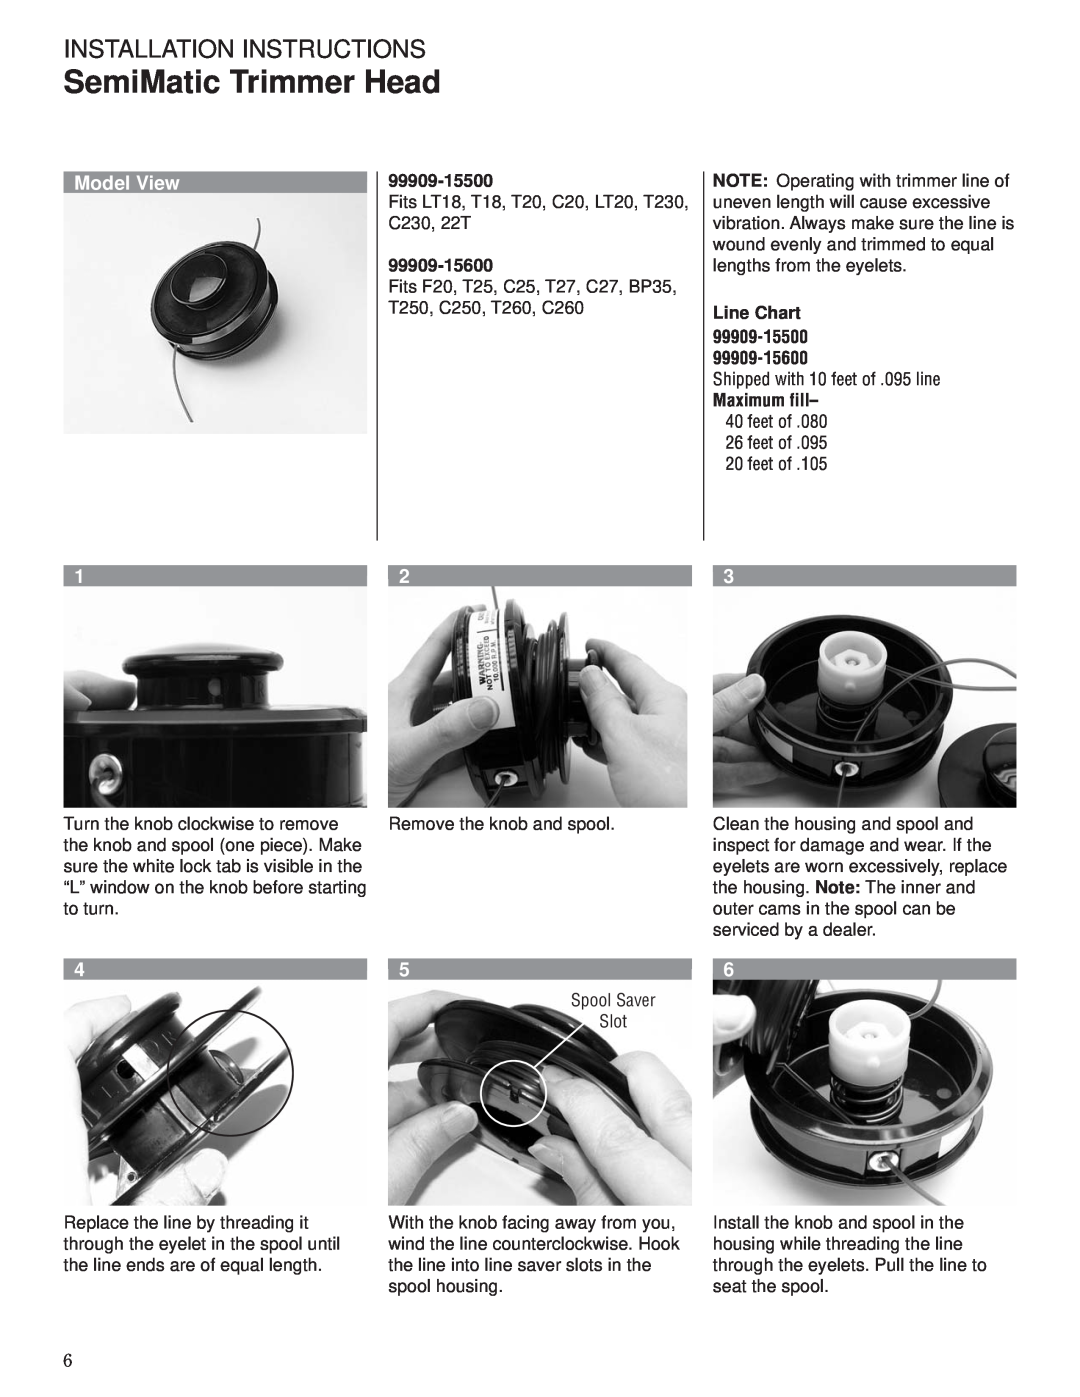 Husqvarna 80792 manual SemiMatic Trimmer Head, 99909-15500, 99909-15600, Line Chart, Installation Instructions, Model View 